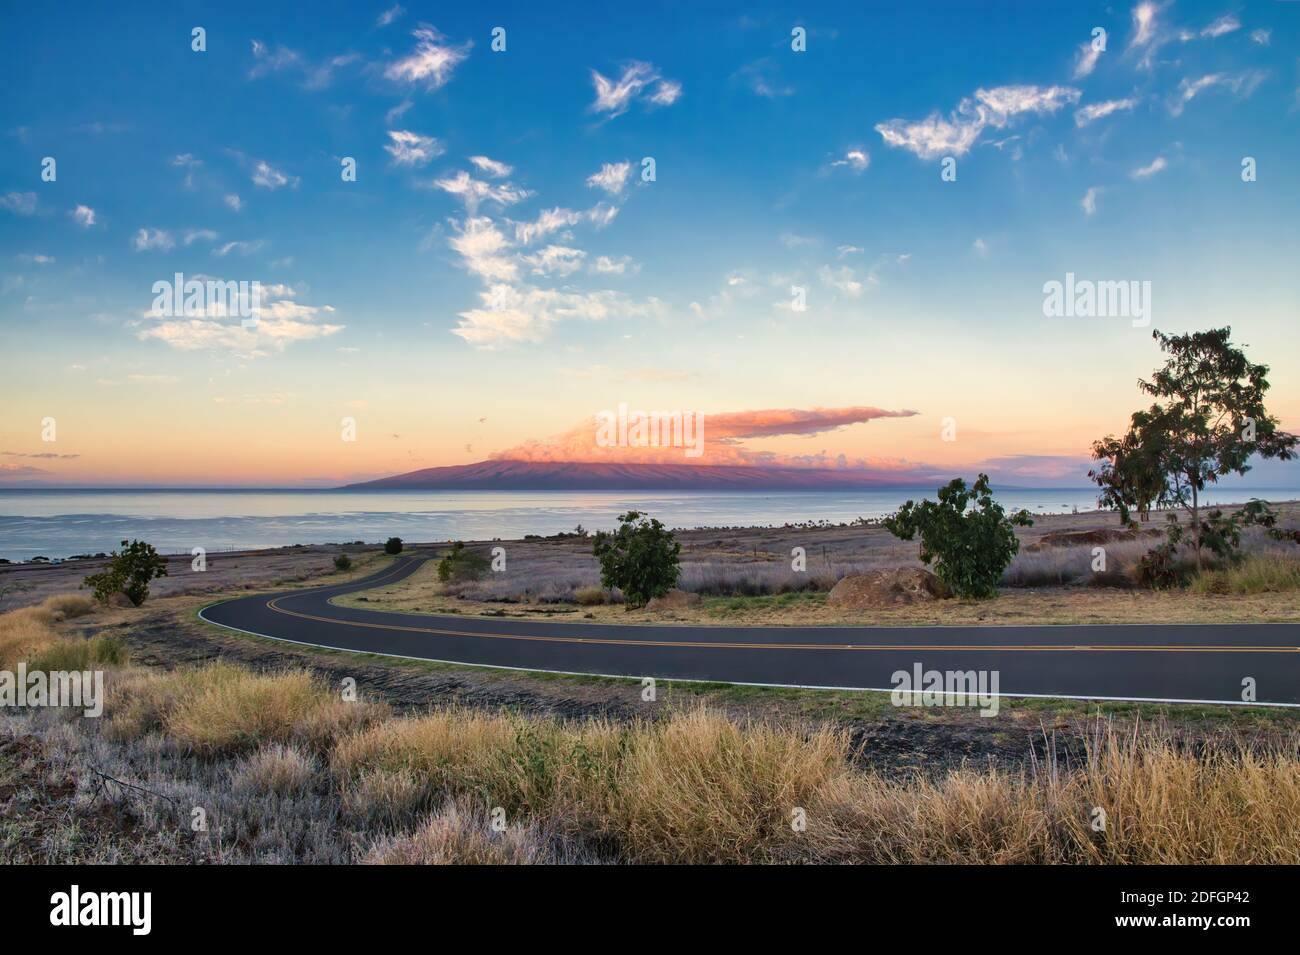 Vista di Lanai da una curva in una strada su Maui. Foto Stock